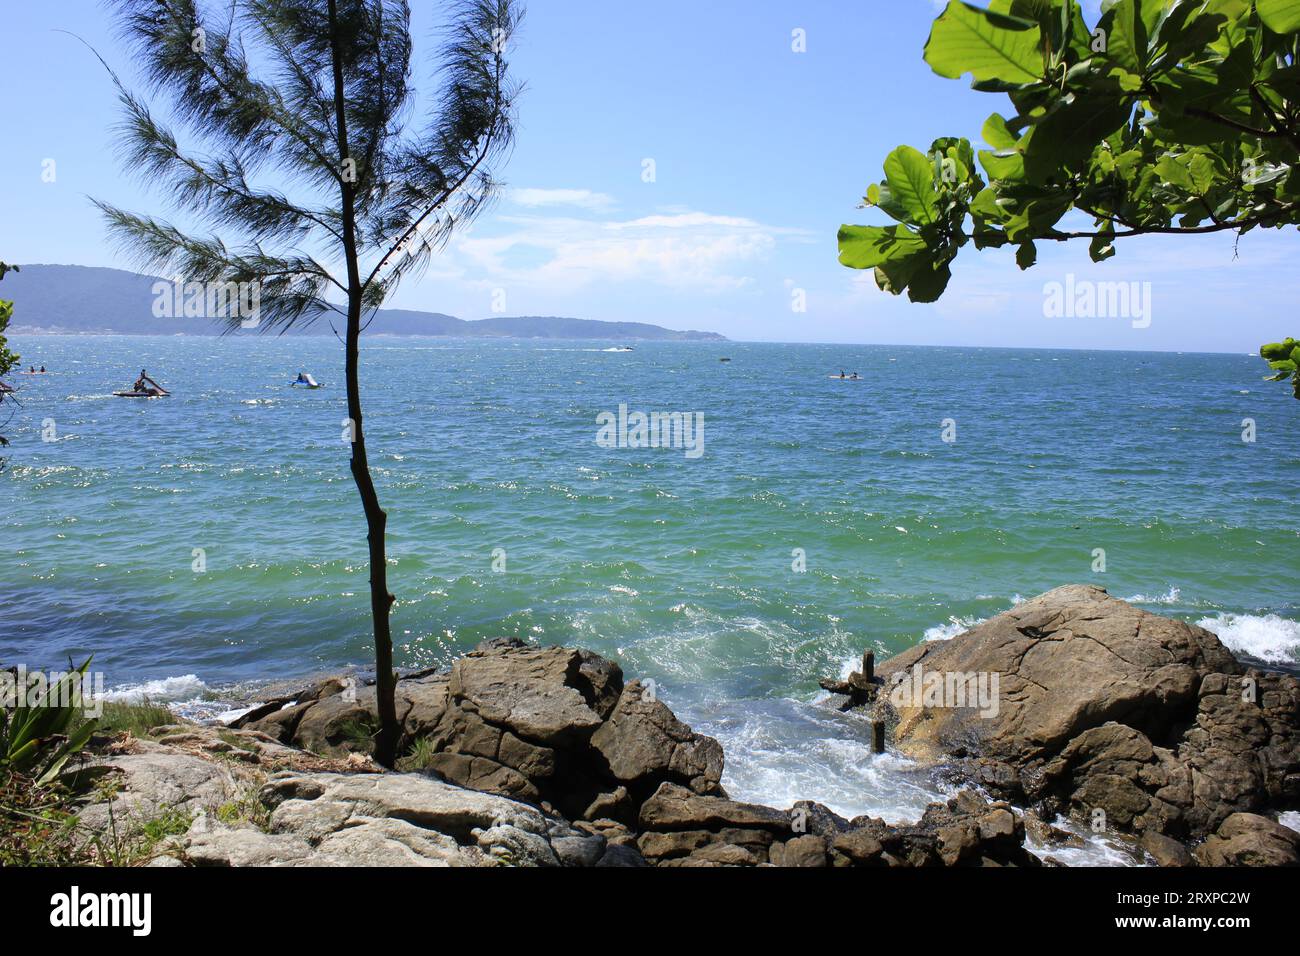 Mar com rochas e natureza Stock Photo